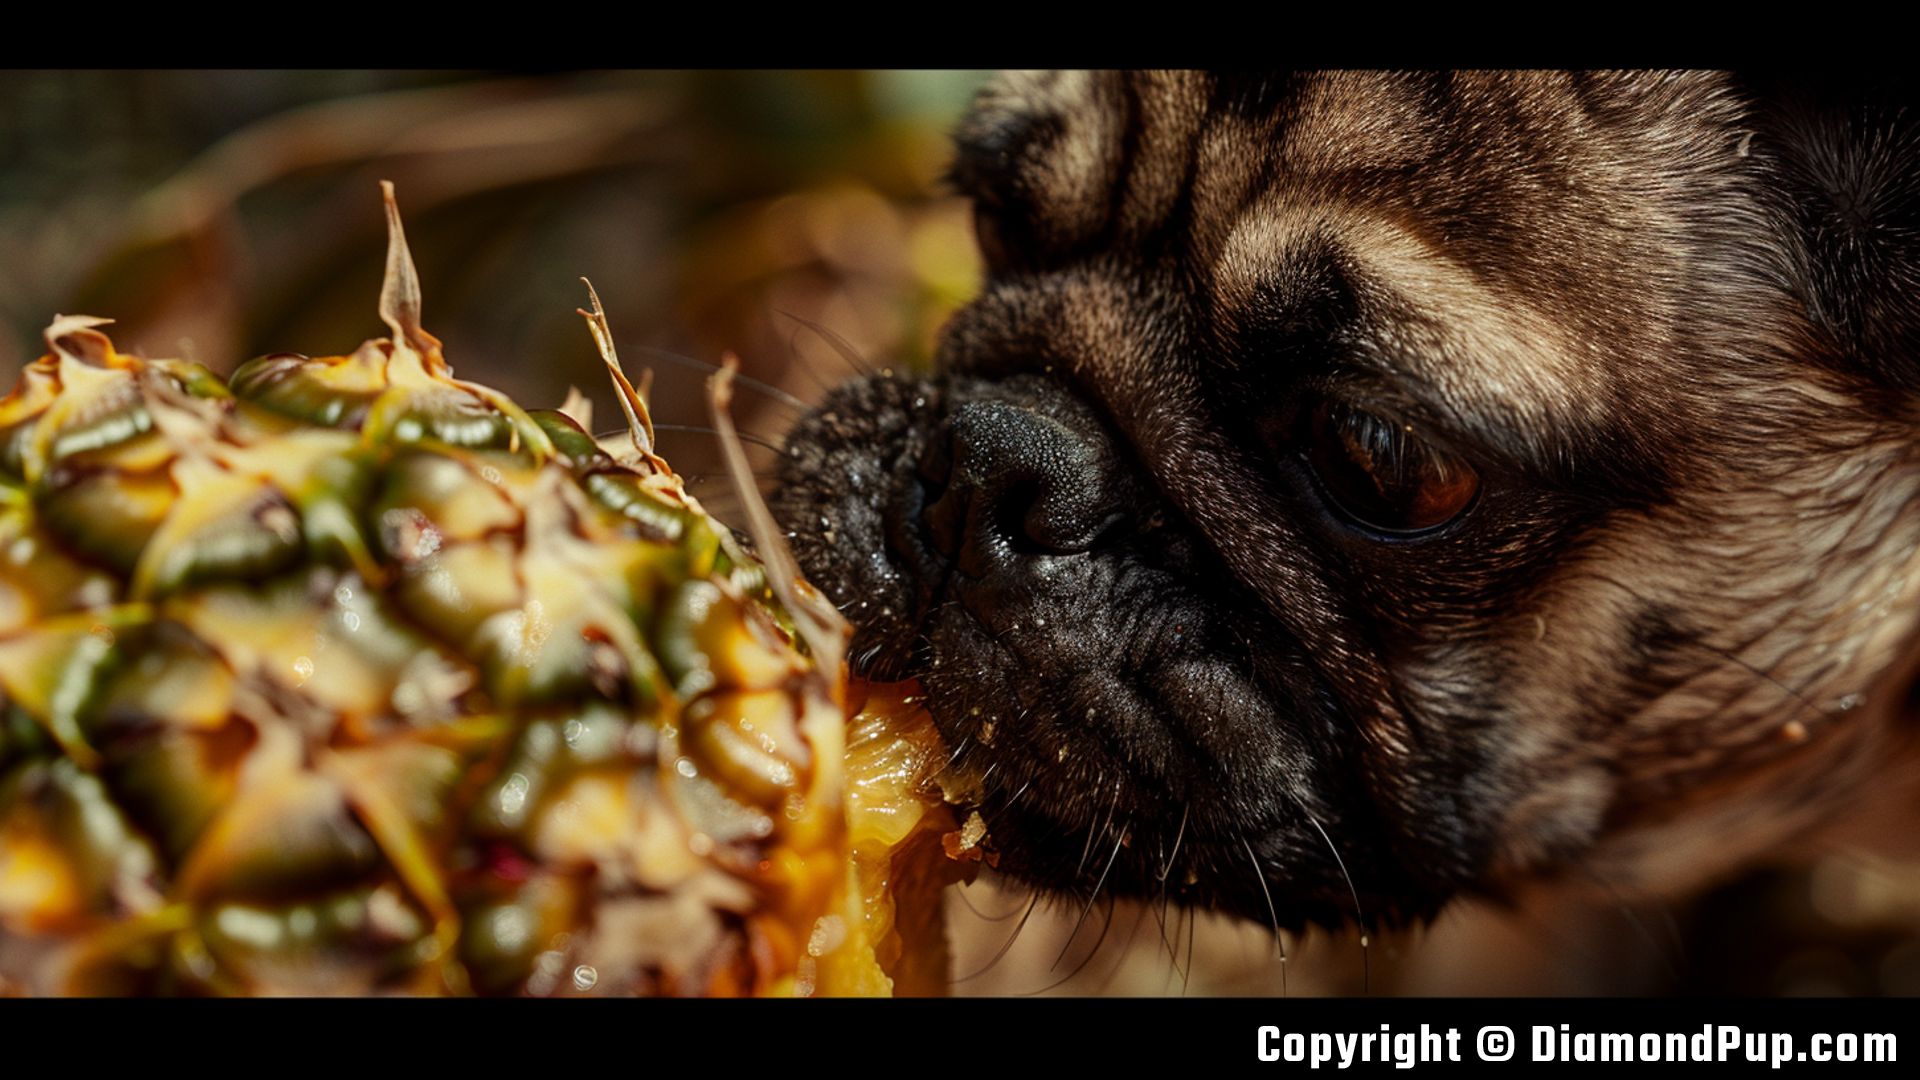 Photo of a Cute Pug Eating Pineapple